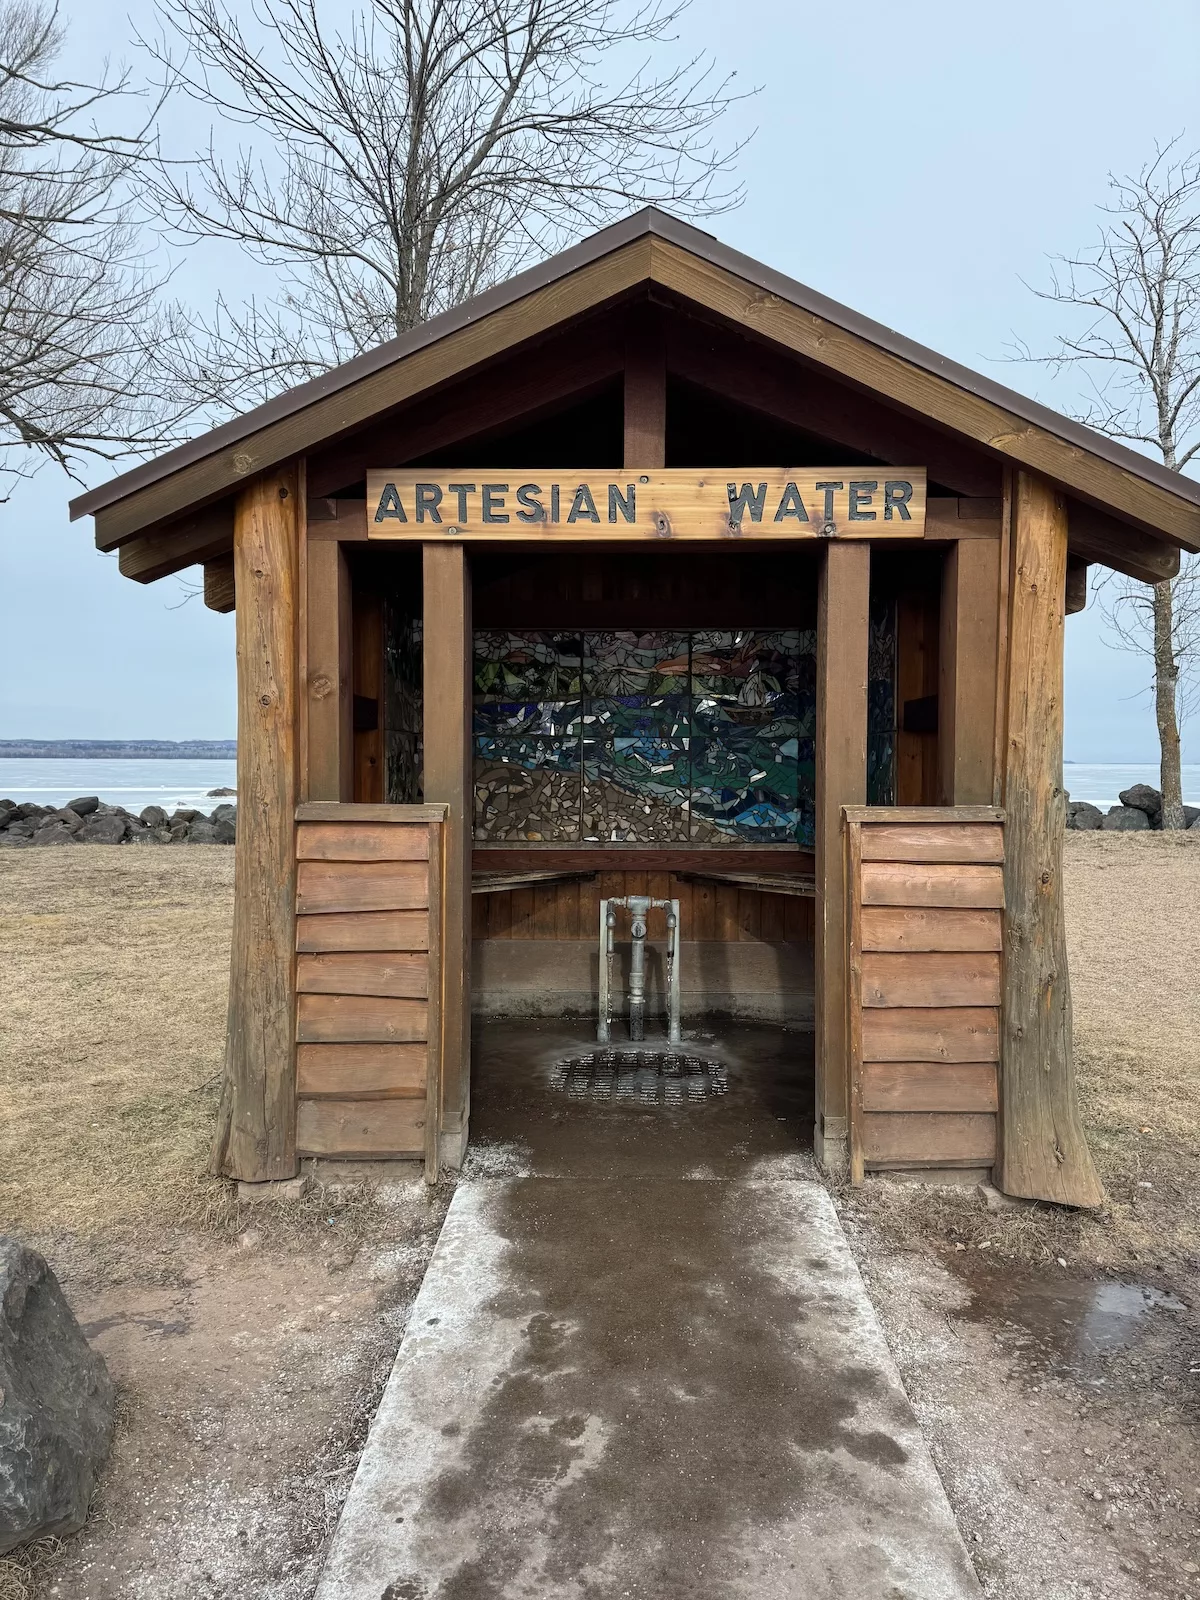 Artesian Well featuring mosaic wall art at Maslowski Beach in Ashland, WI